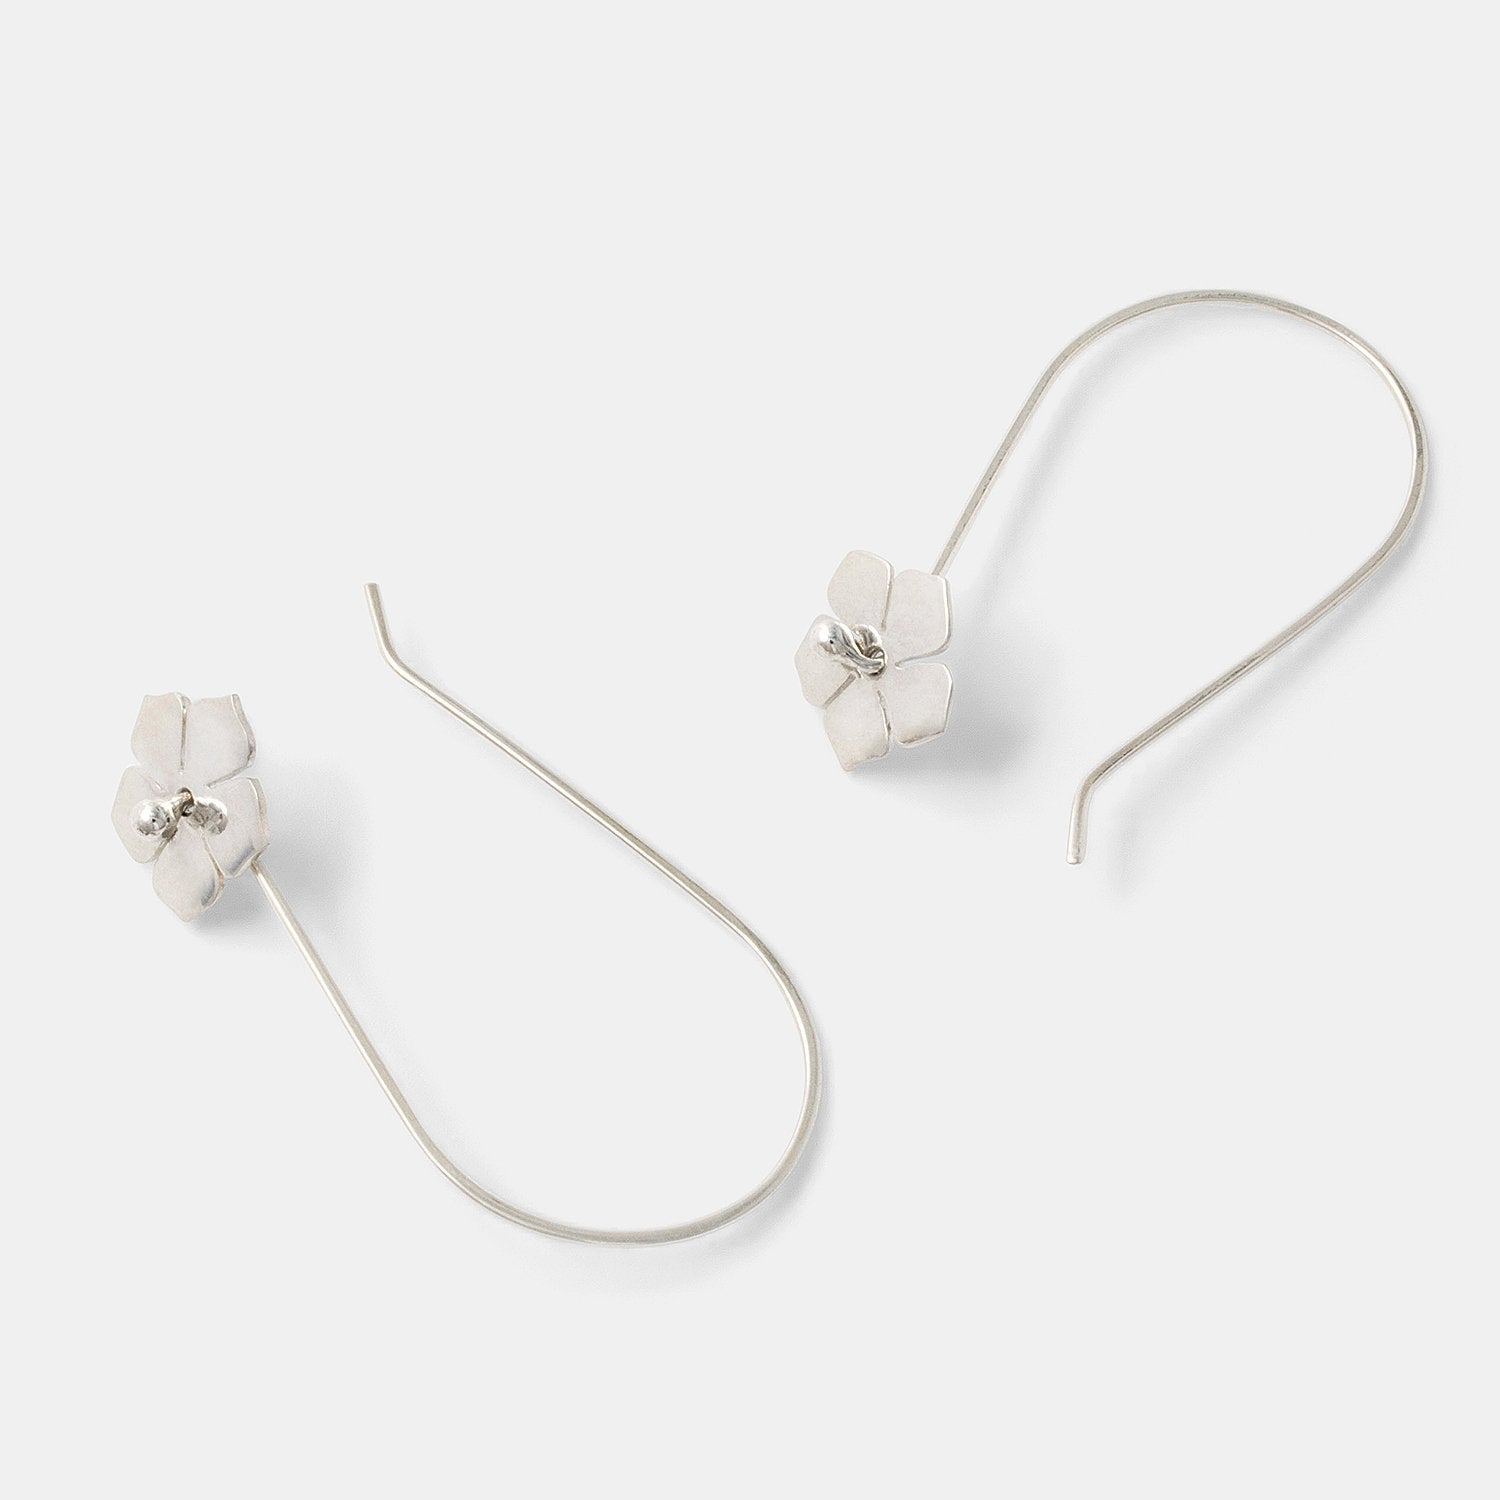 Forget-me-not earrings - Simone Walsh Jewellery Australia